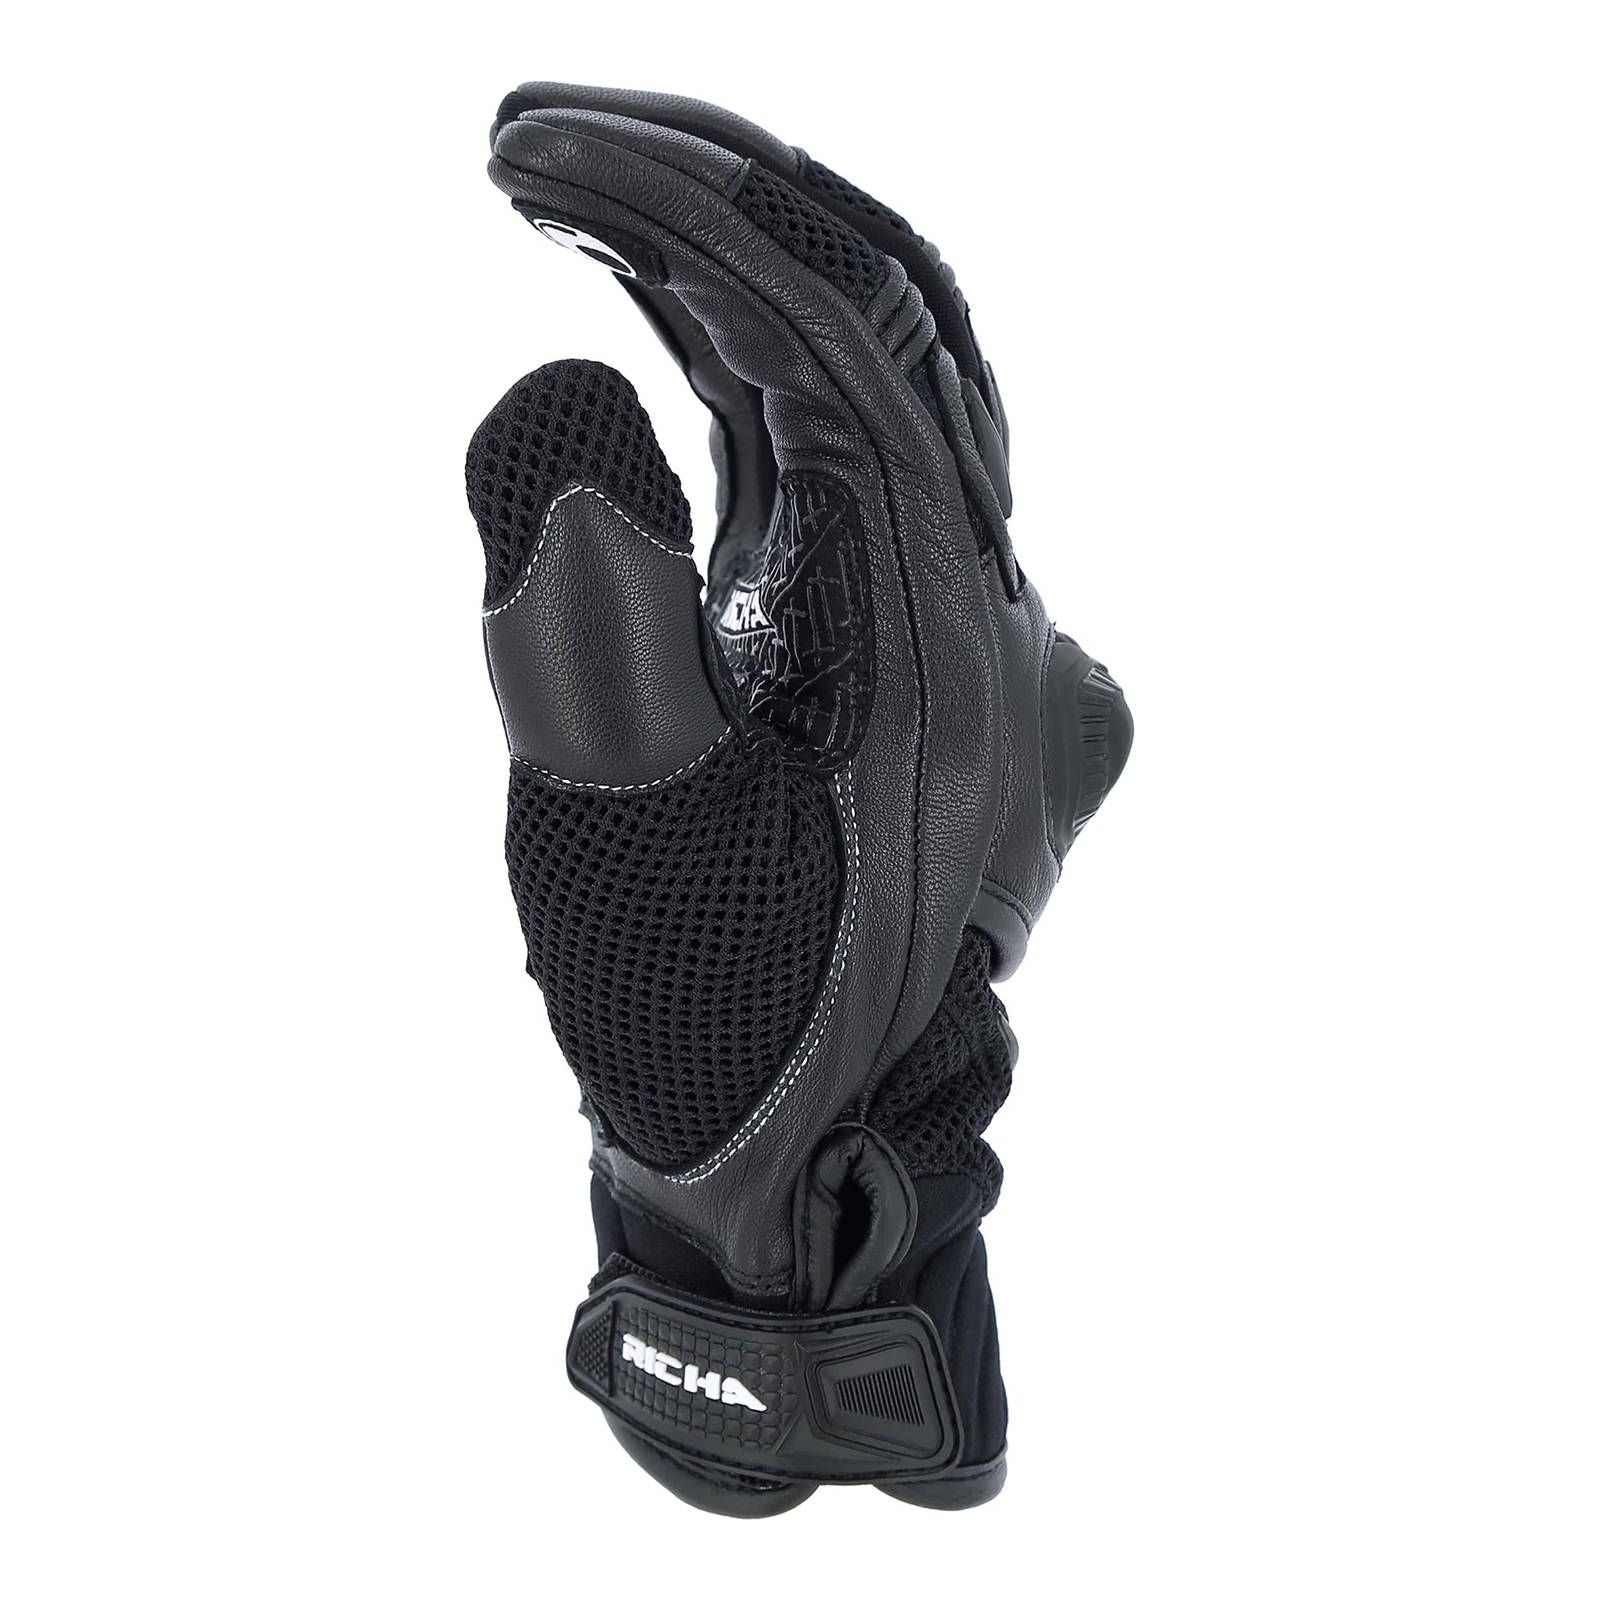 New RICHA Junior Turbo Glove - Black (Youth S) #RAGTKBSML